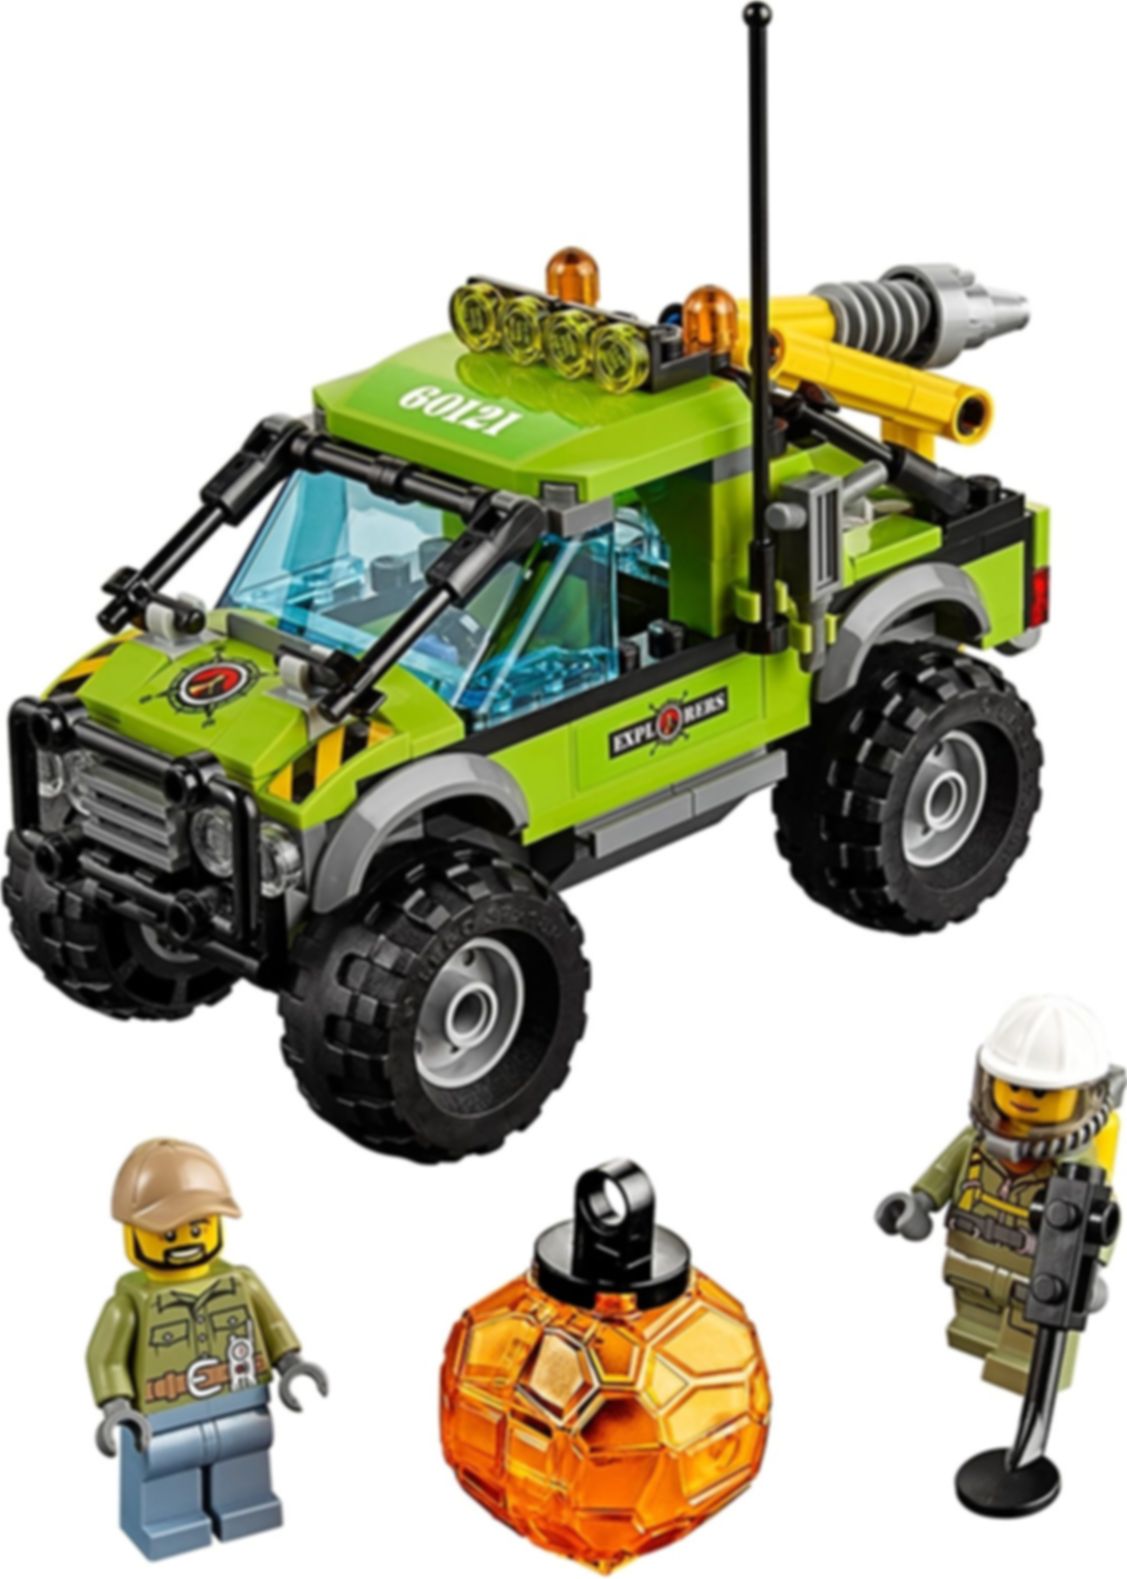 LEGO® City Volcán: Camión de exploración partes